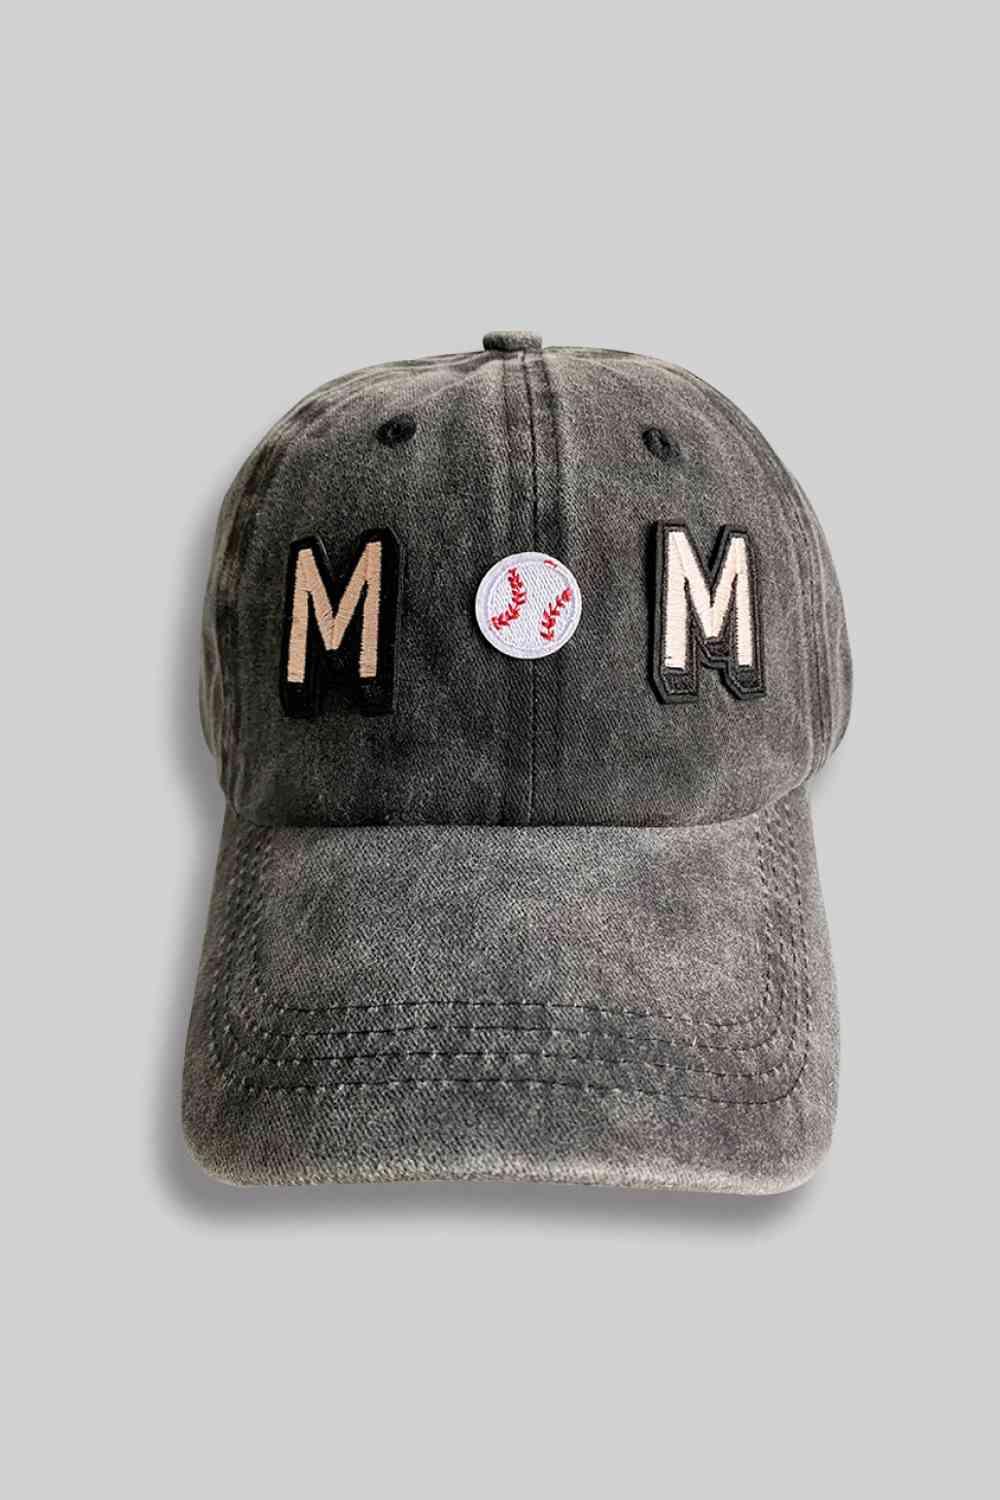 MOM Baseball Cap - Twin Chronicles 